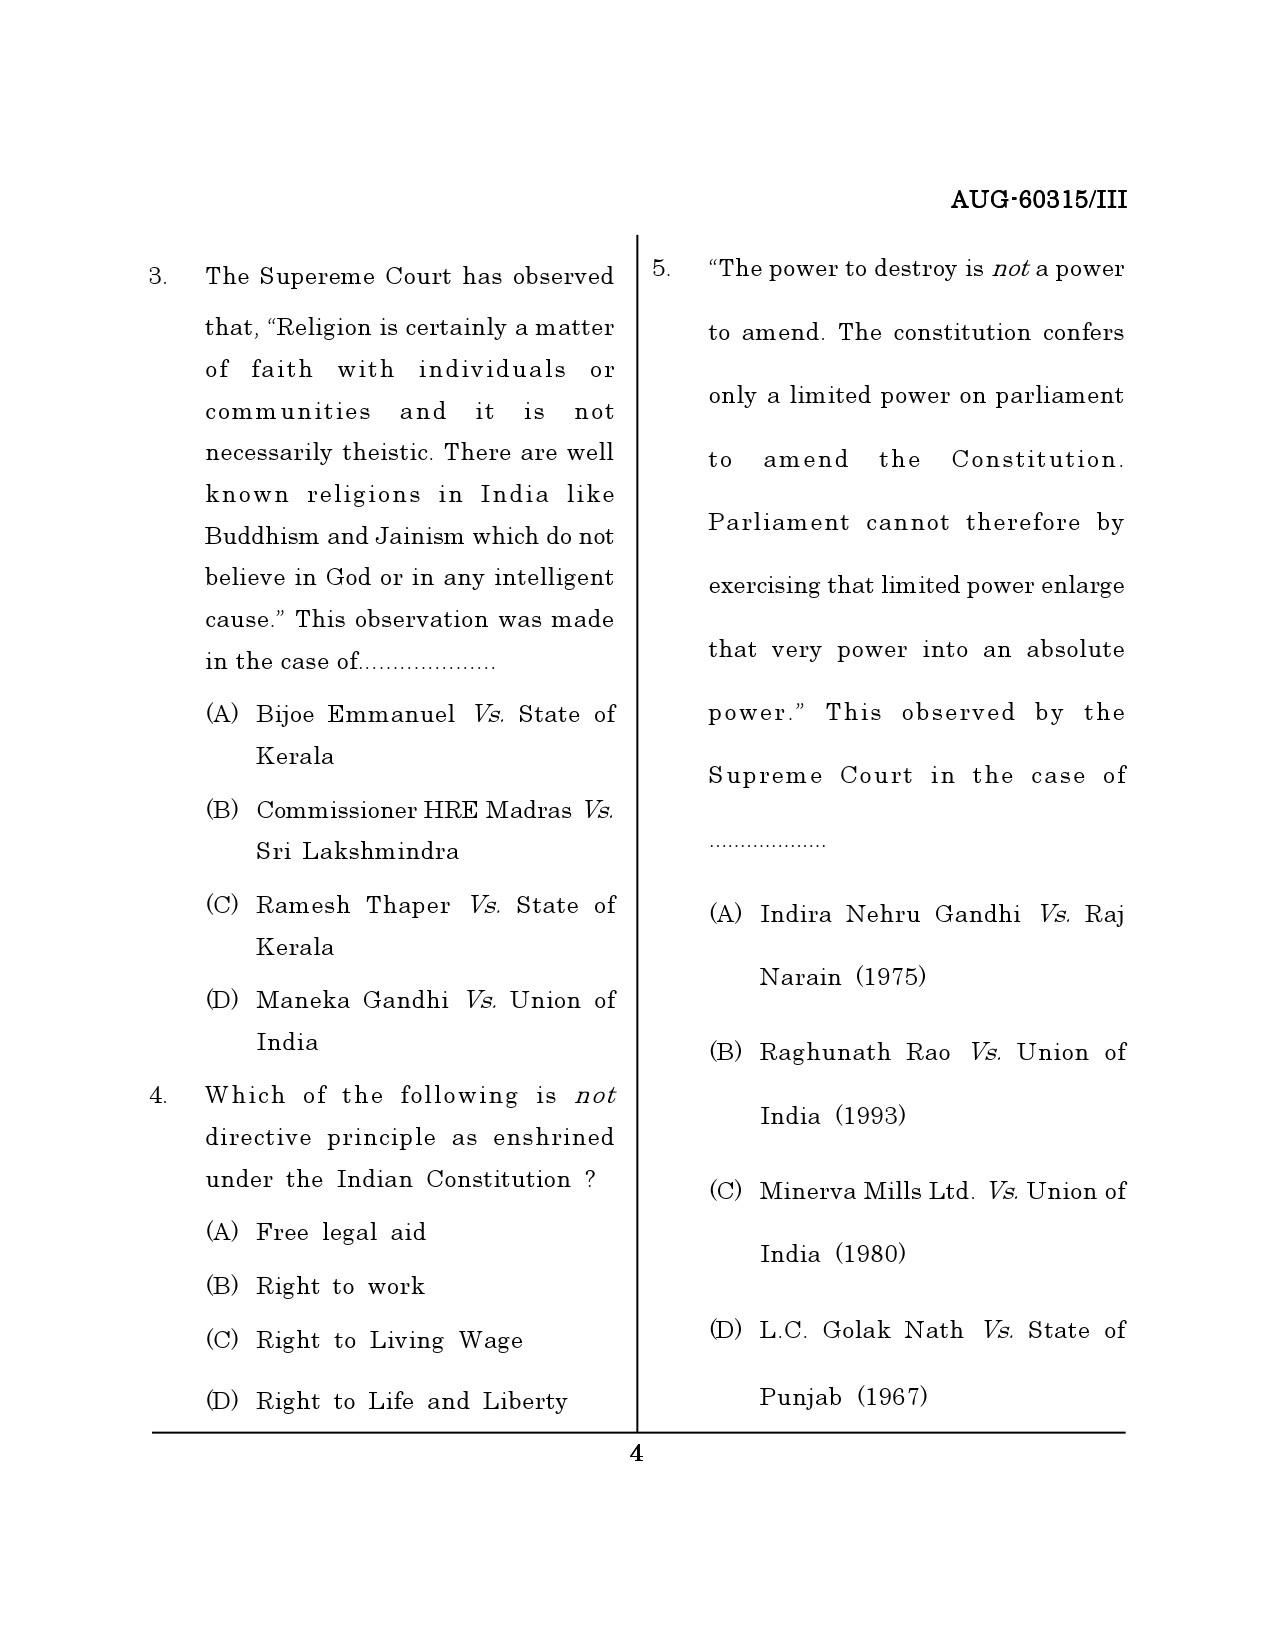 Maharashtra SET Law Question Paper III August 2015 3